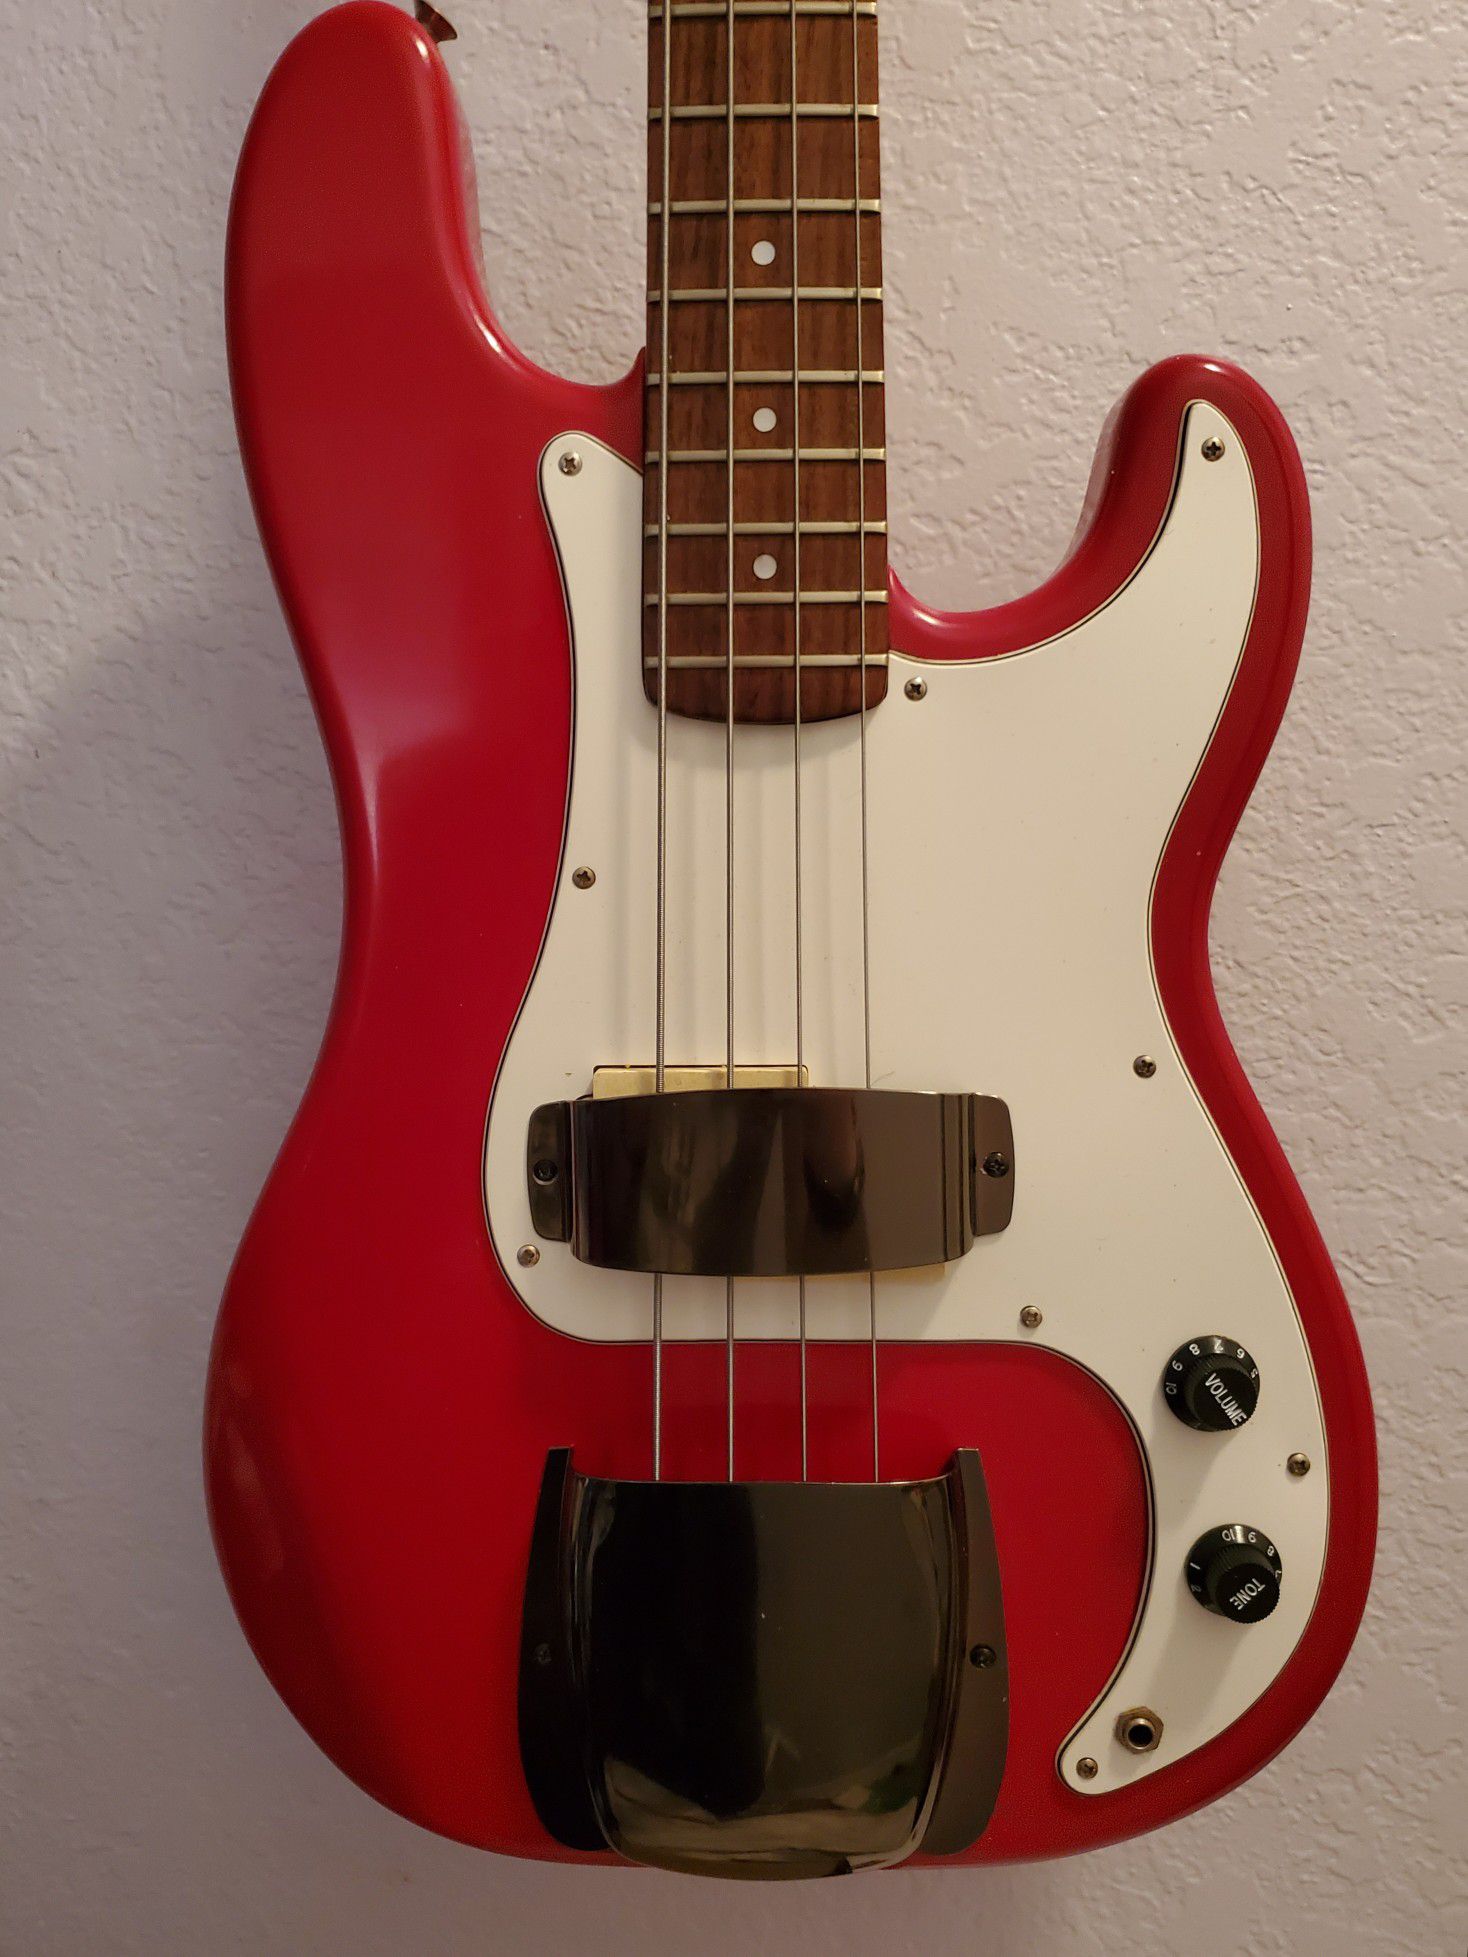 Vintage MIK Hondo precision bass guitar. Fender p bass copy with jazz neck.